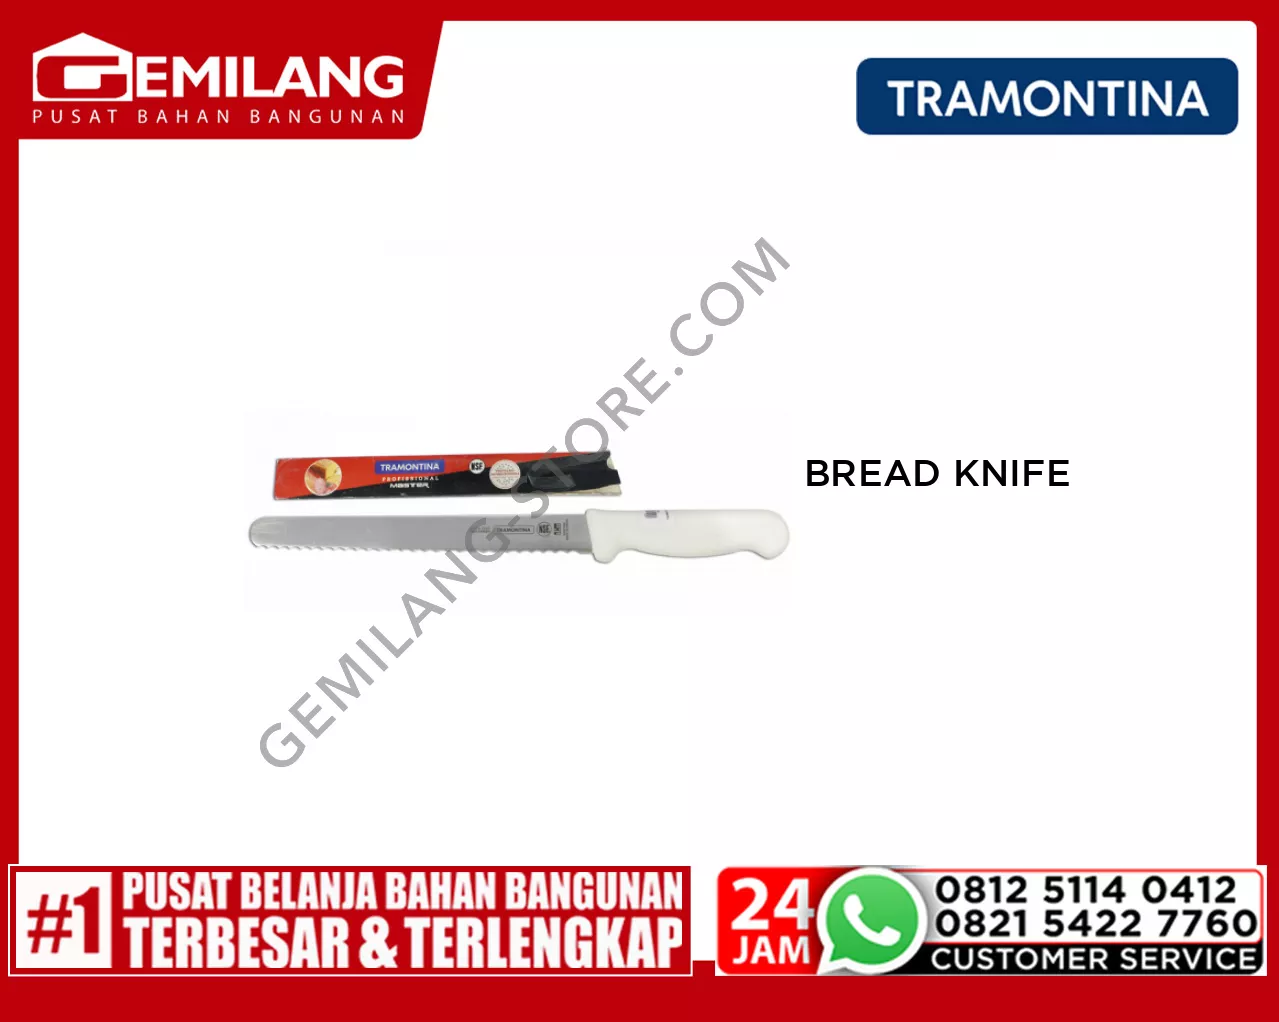 TRAMONTINA BREAD KNIFE